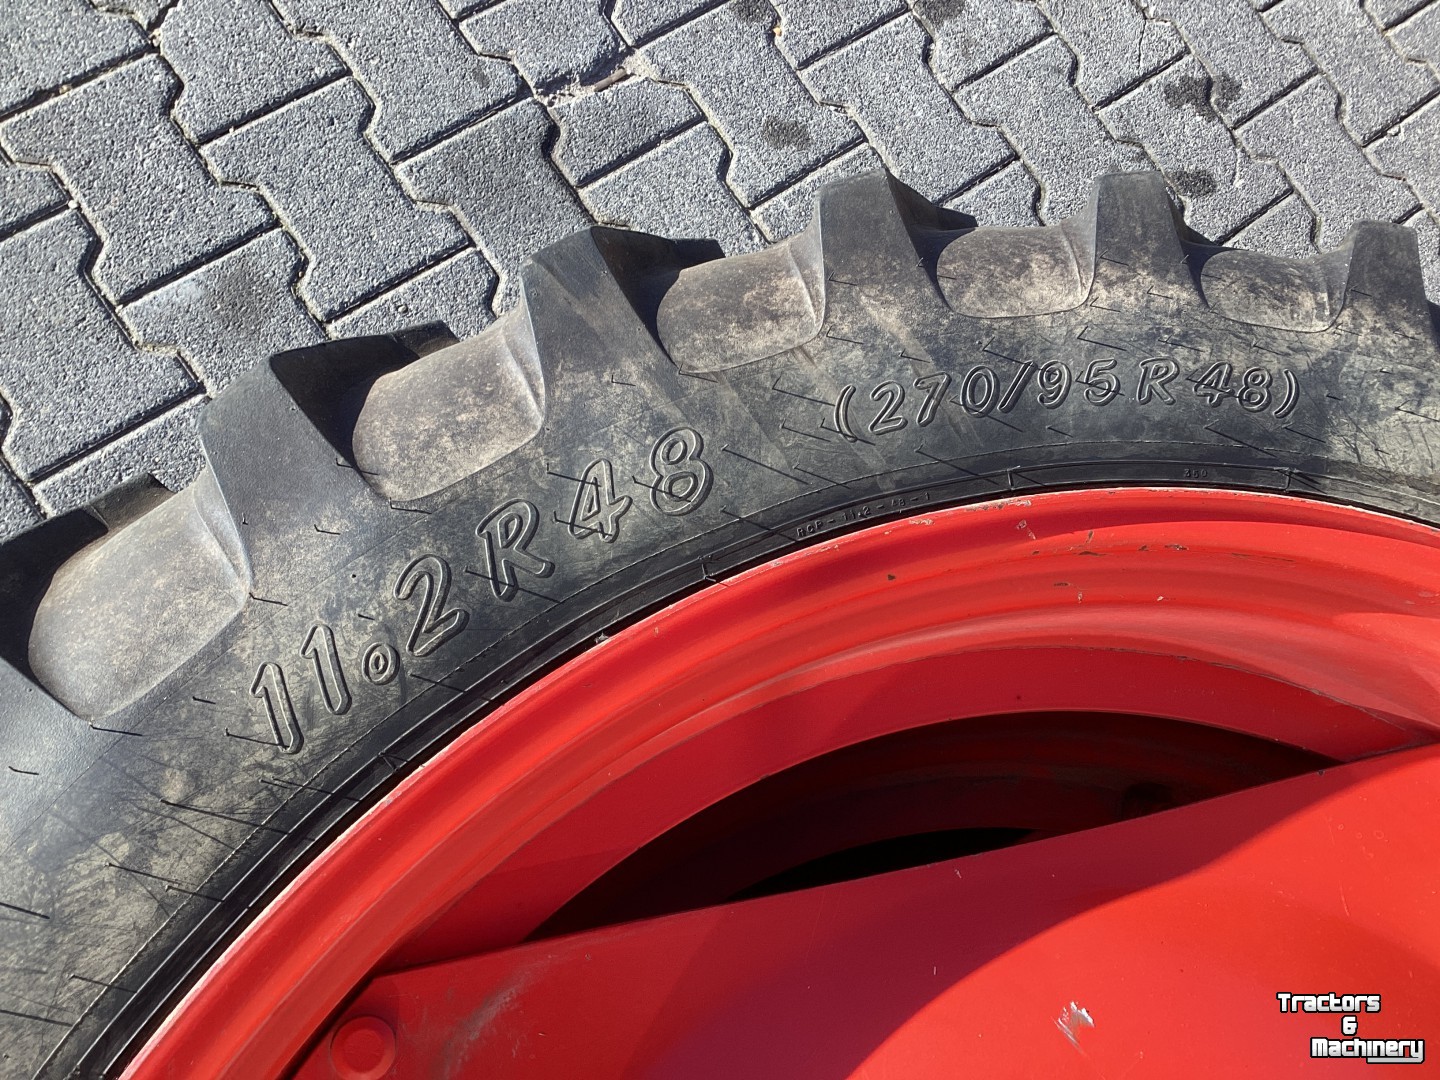 Wheels, Tyres, Rims & Dual spacers Alliance 11.2- r 48 ( 270 / 95 / r48